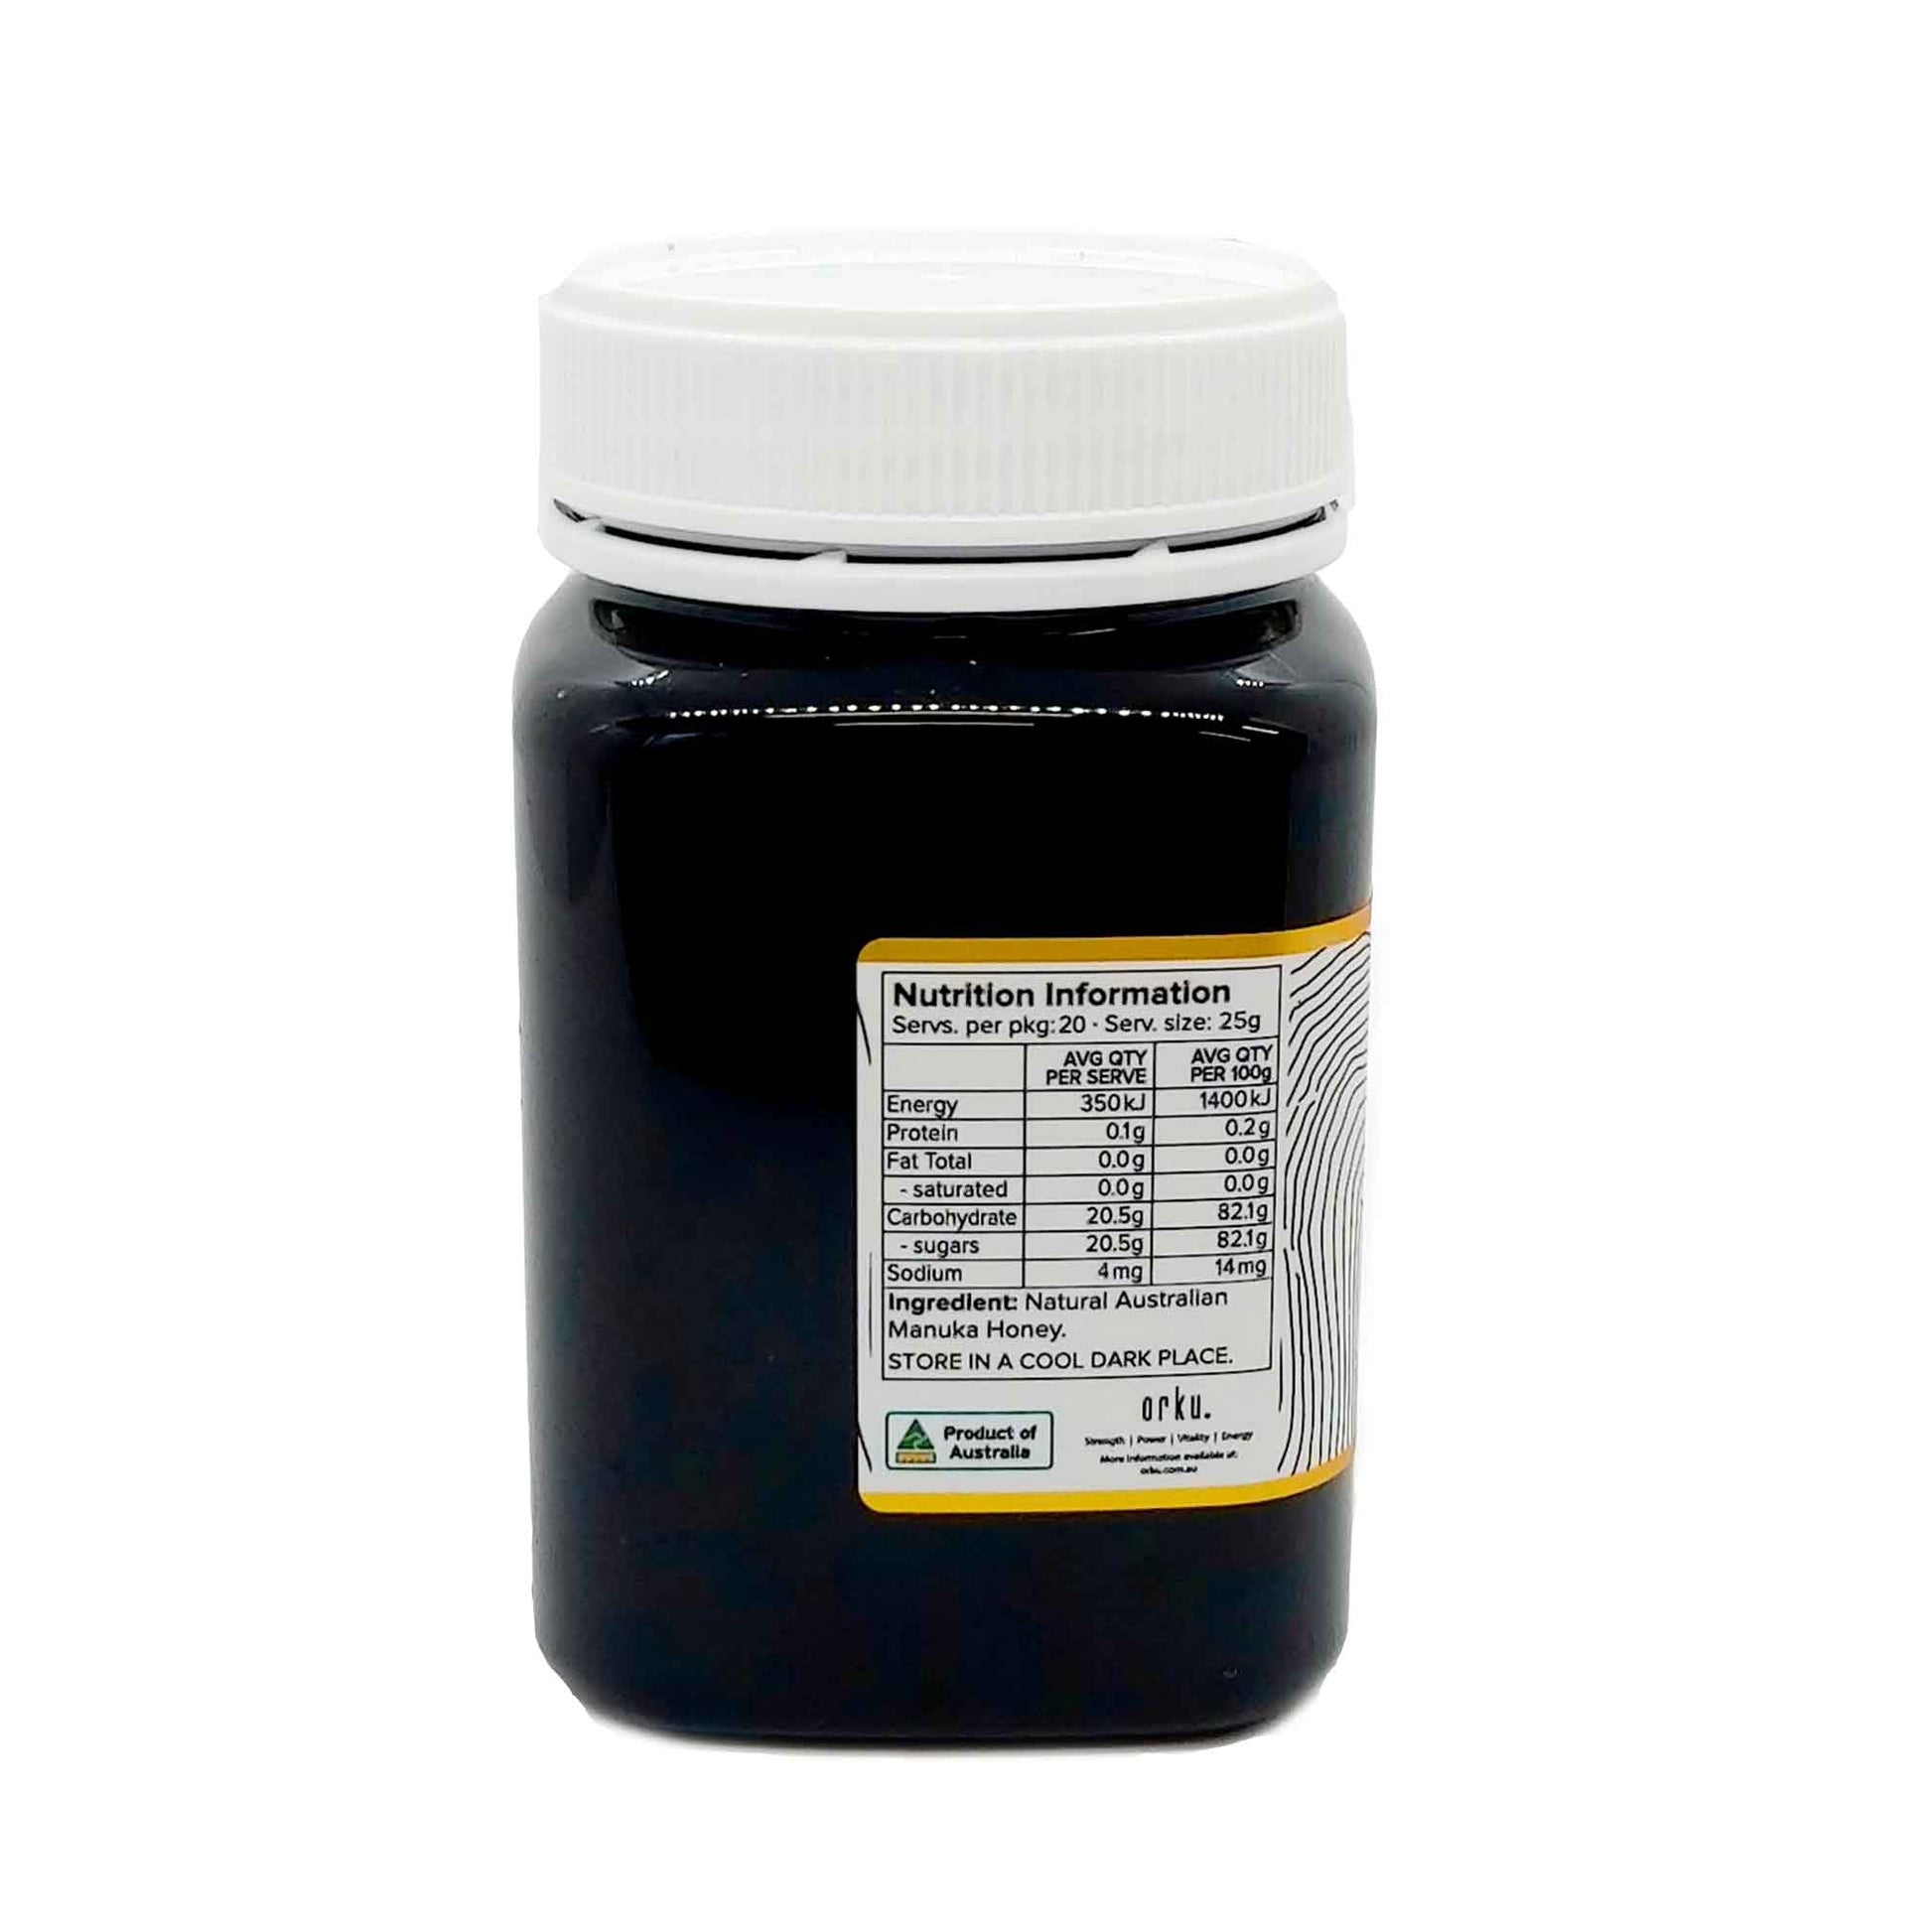 500g MGO 100+ Australian Manuka Honey - 100% Raw Natural Pure Jelly Bush